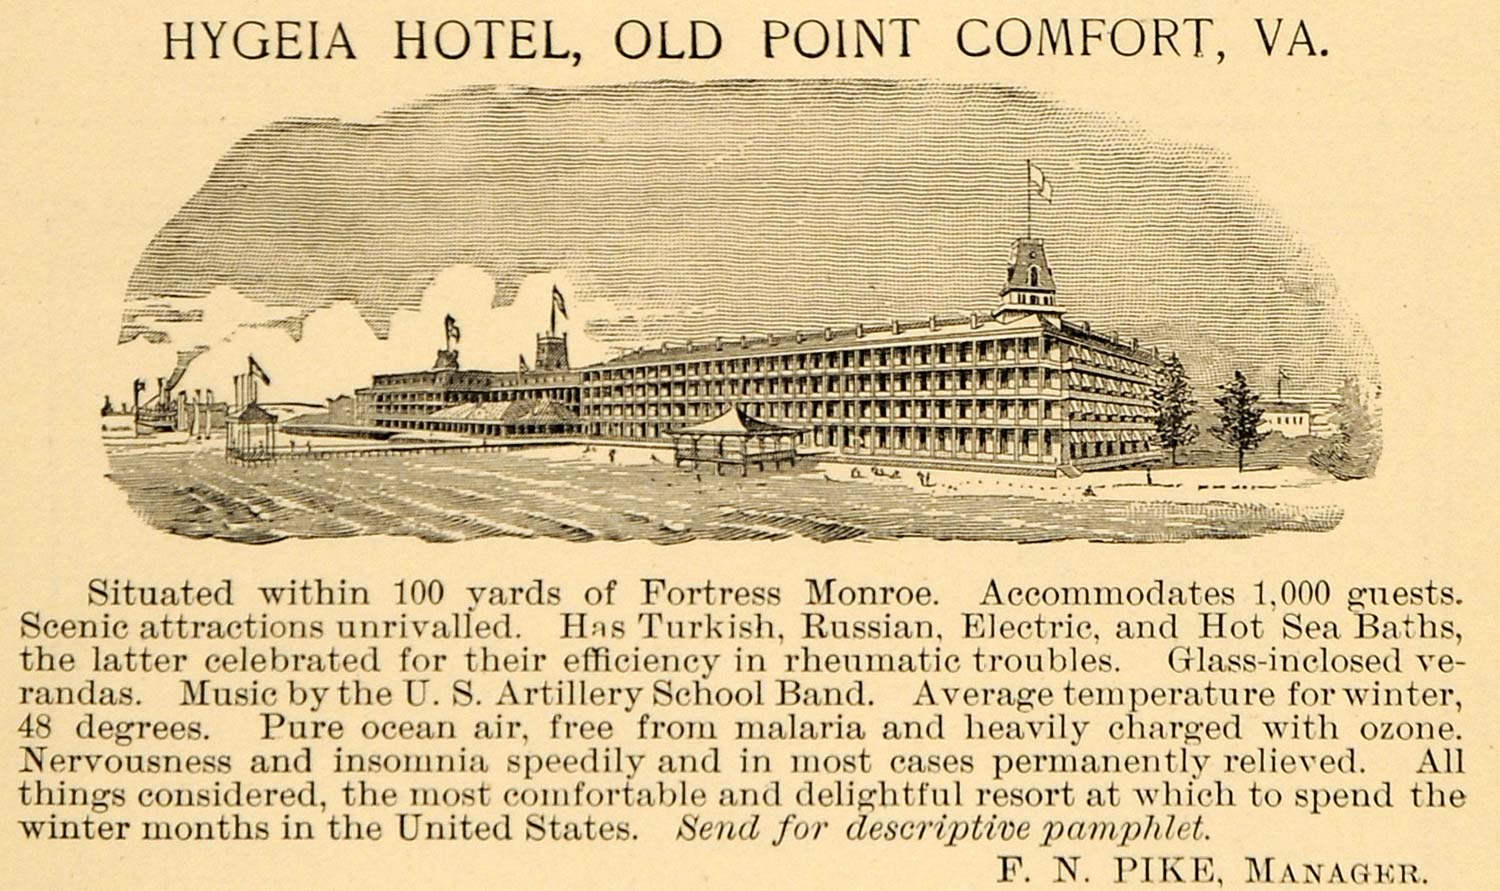 1891 Ad Hygeia Hotel Old Point Comfort VA F. N. Pike - ORIGINAL ADVERTISING TFO1